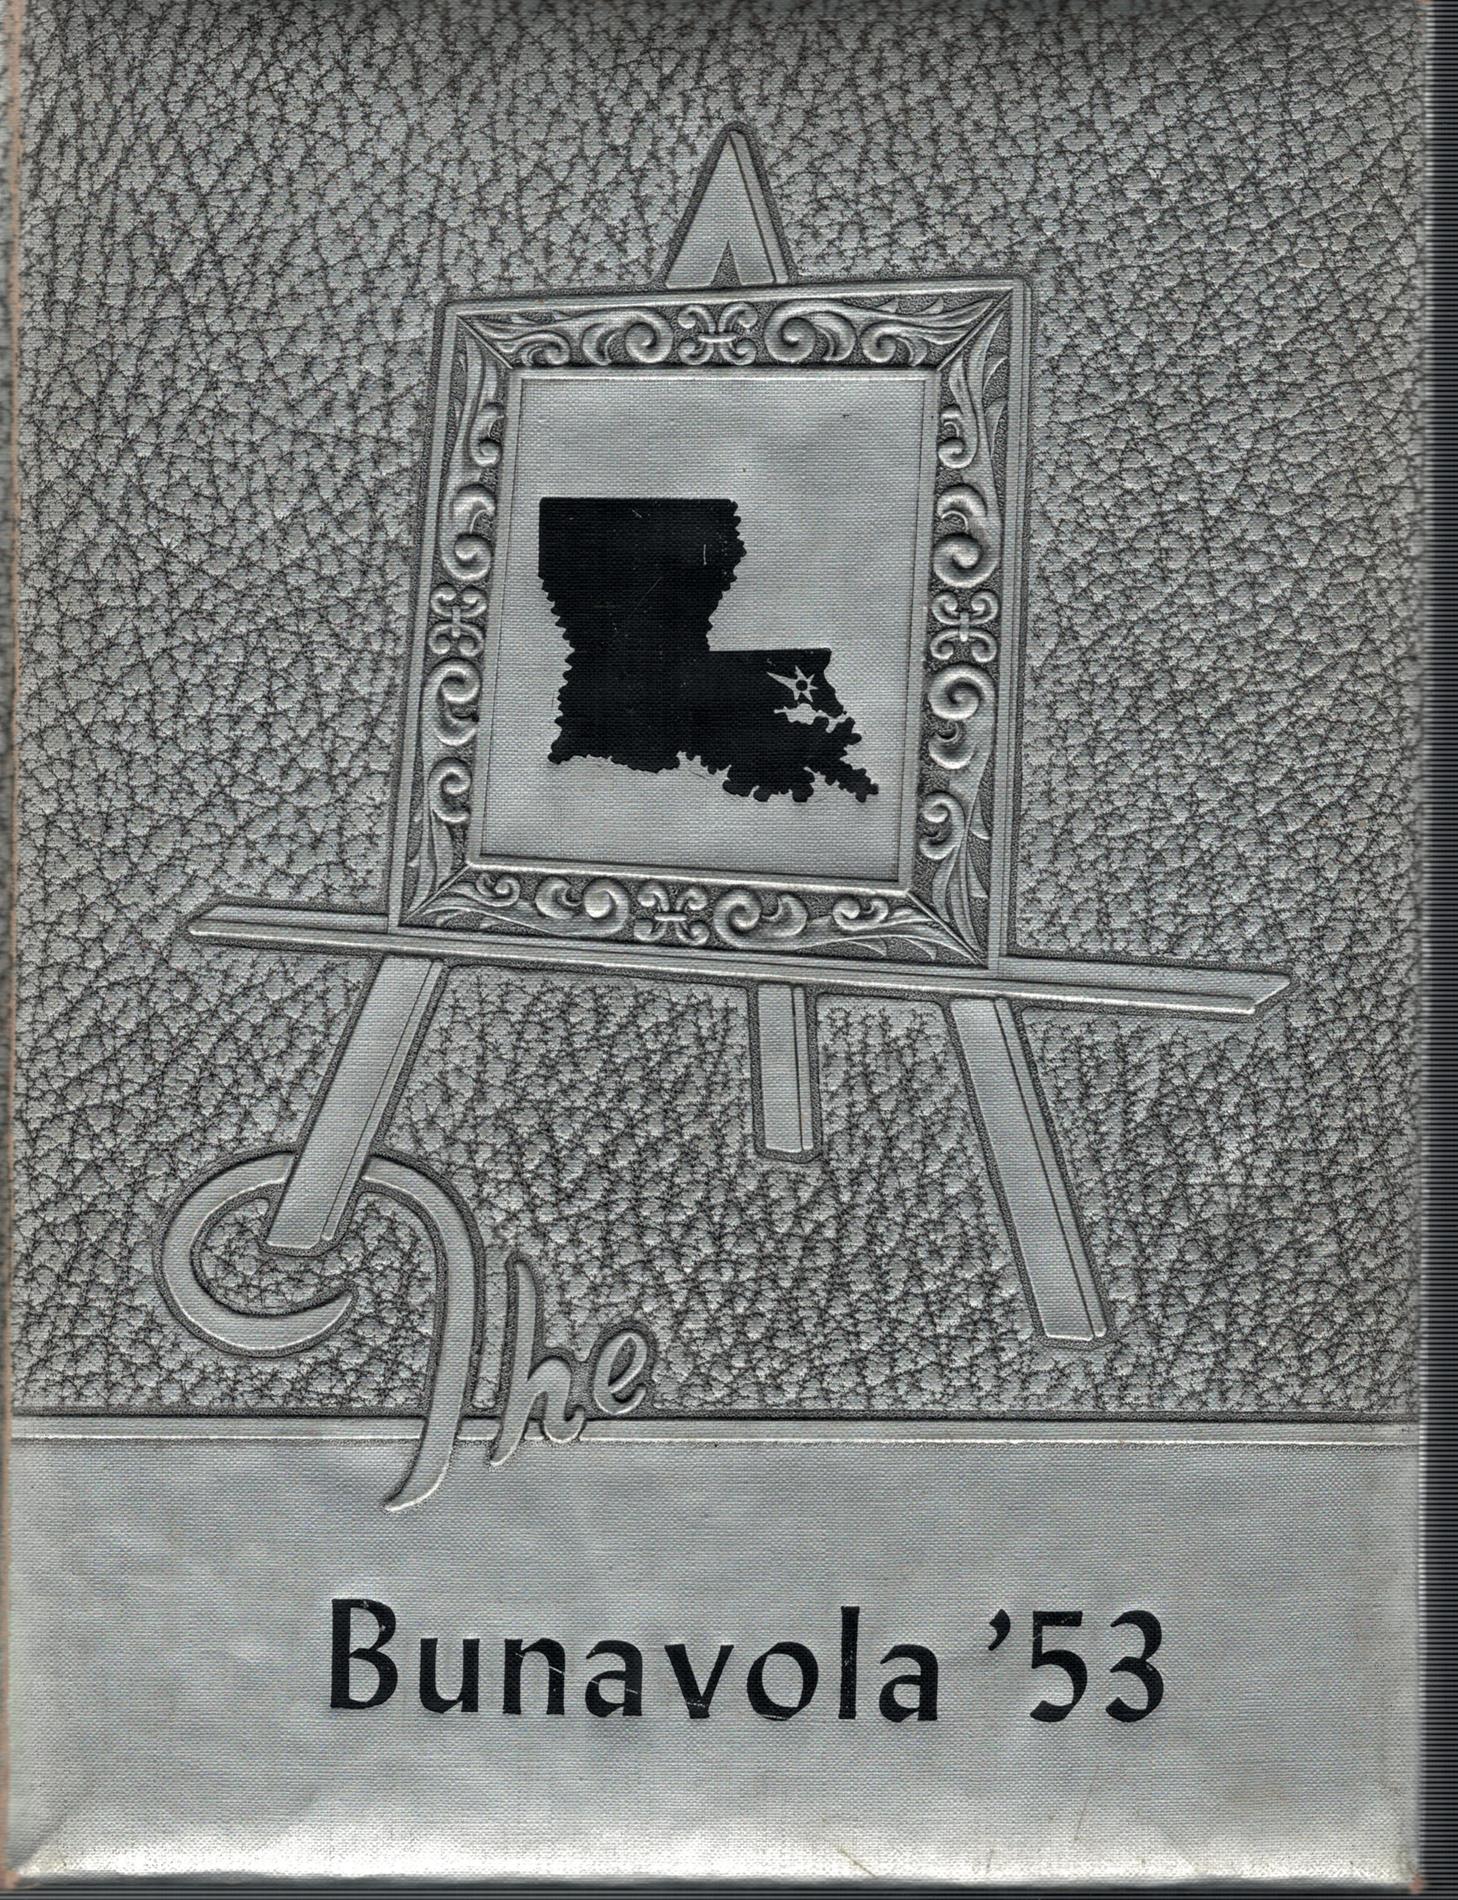 1953 Bunavola